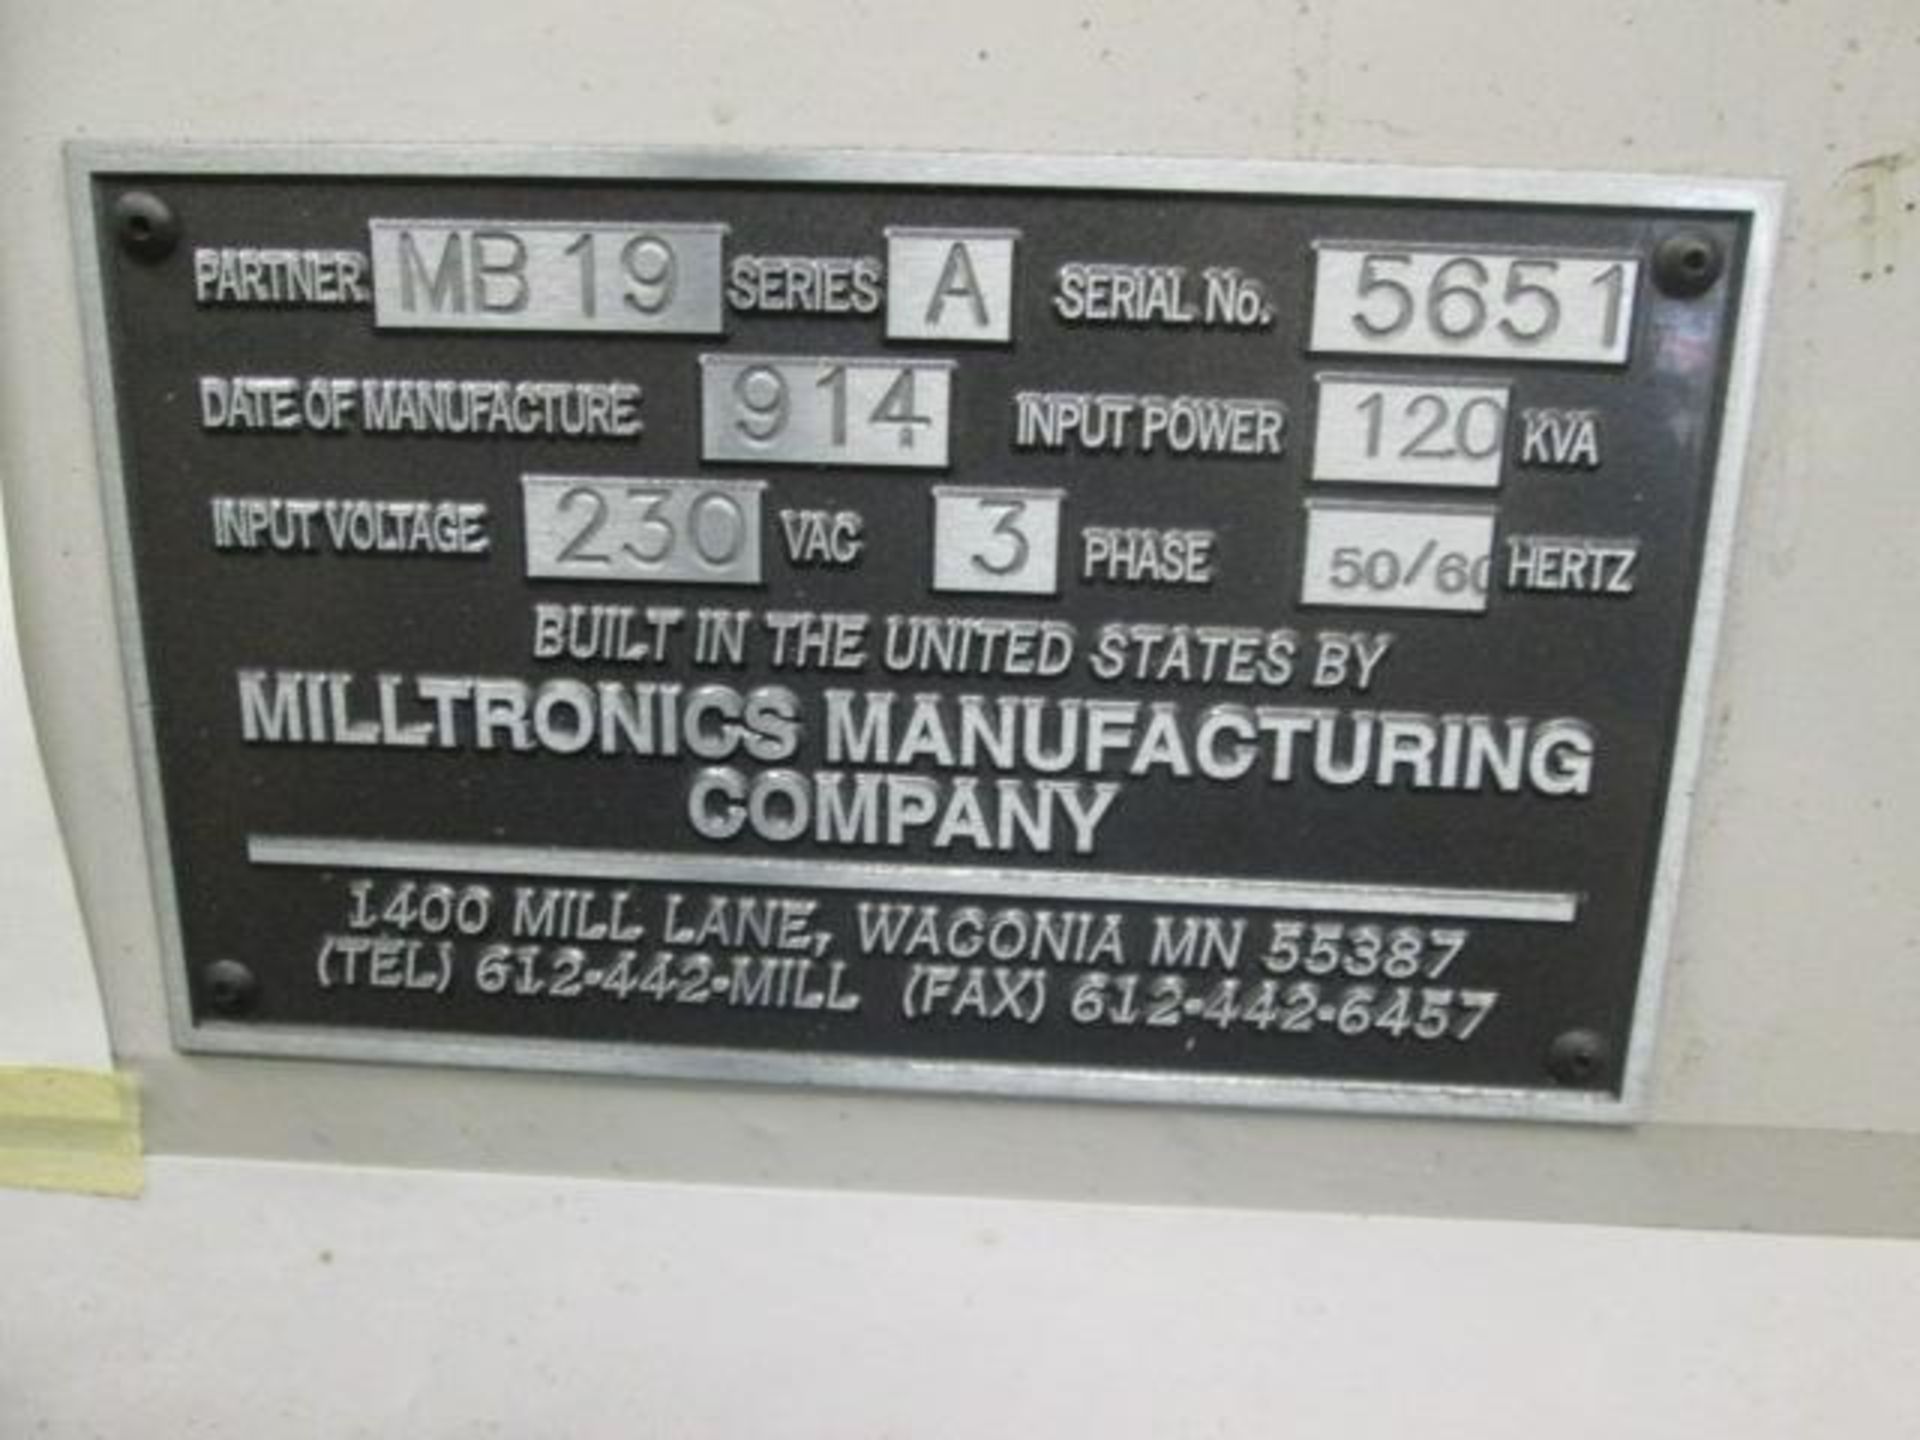 (1999) Milltronics MB-19 Cnc Vertical Mill - Image 7 of 8